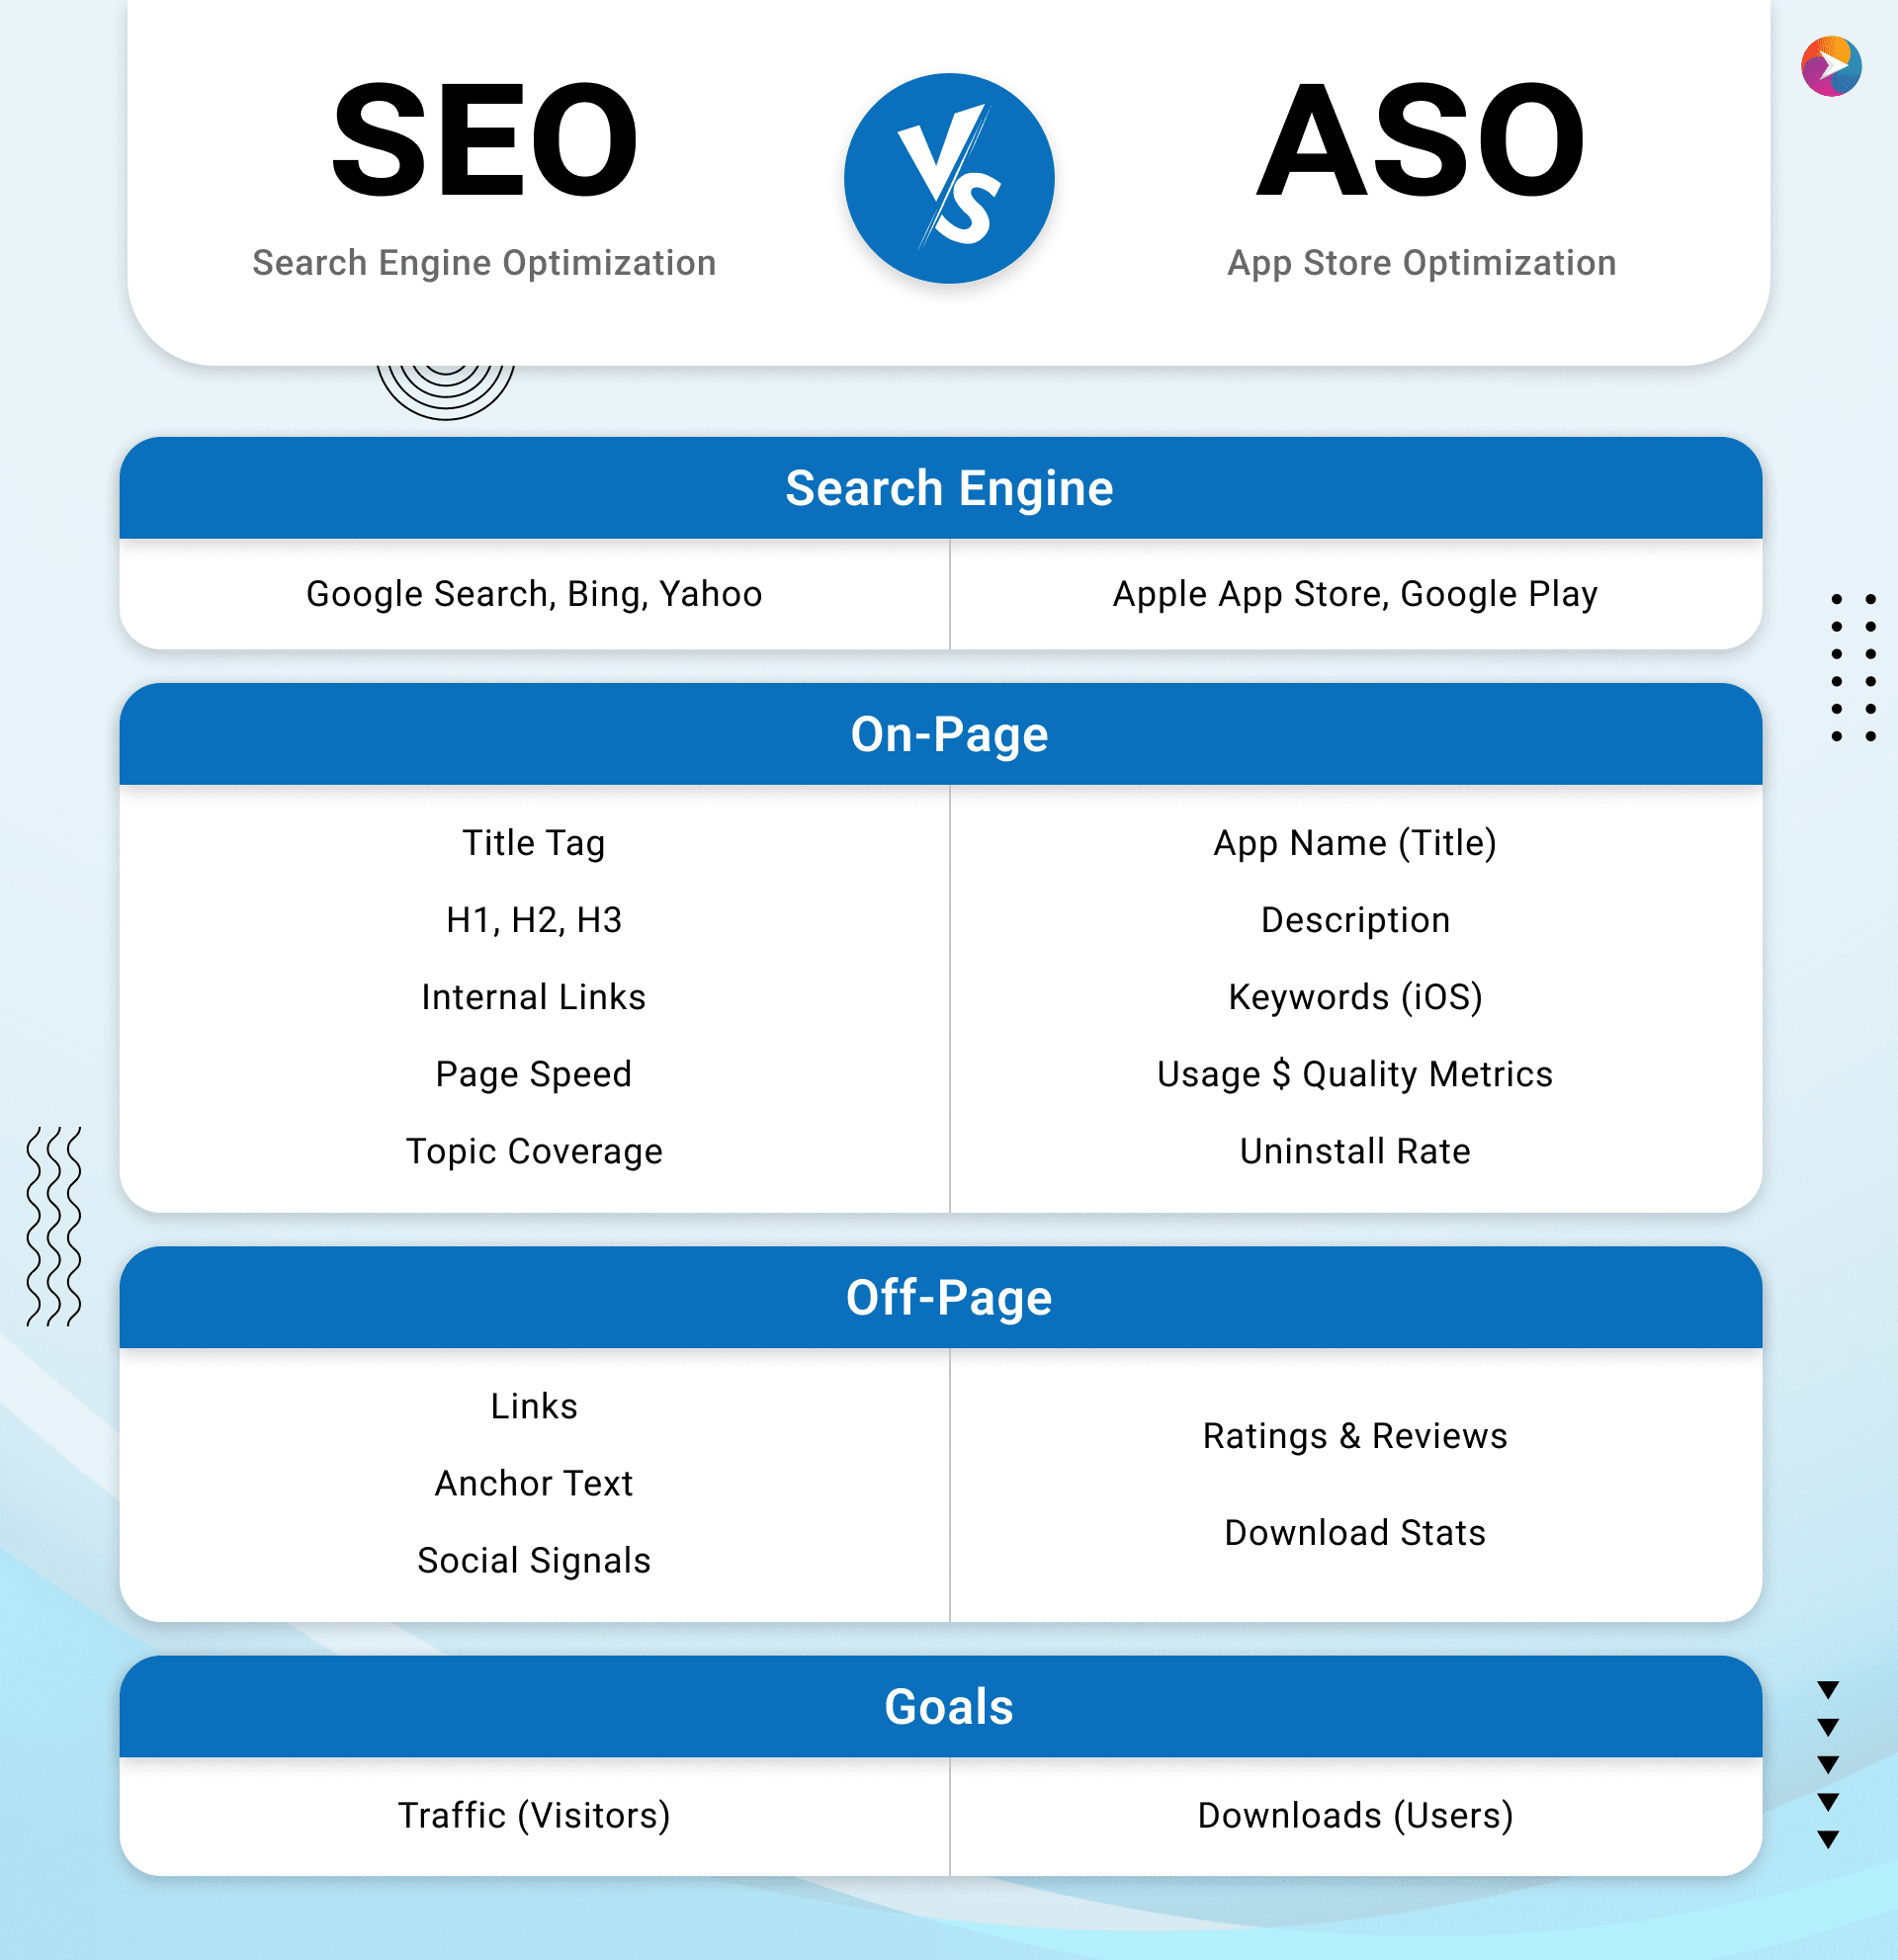 SEO vs ASO Image Infographic